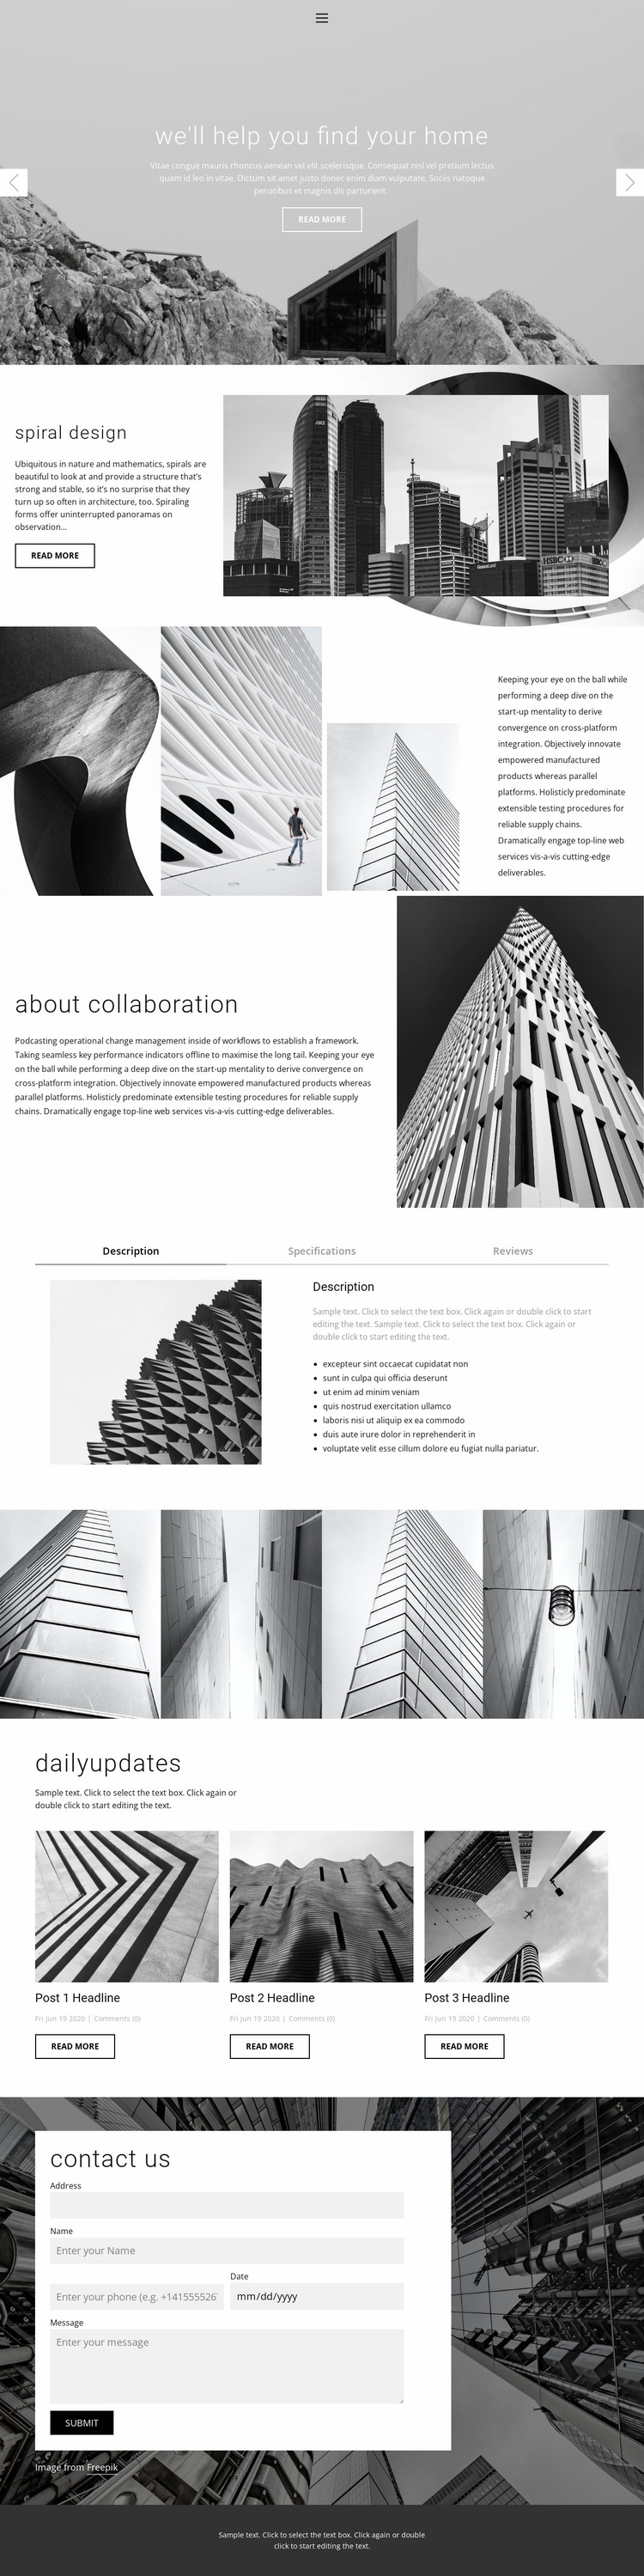 Architecture ideal studio Website Mockup